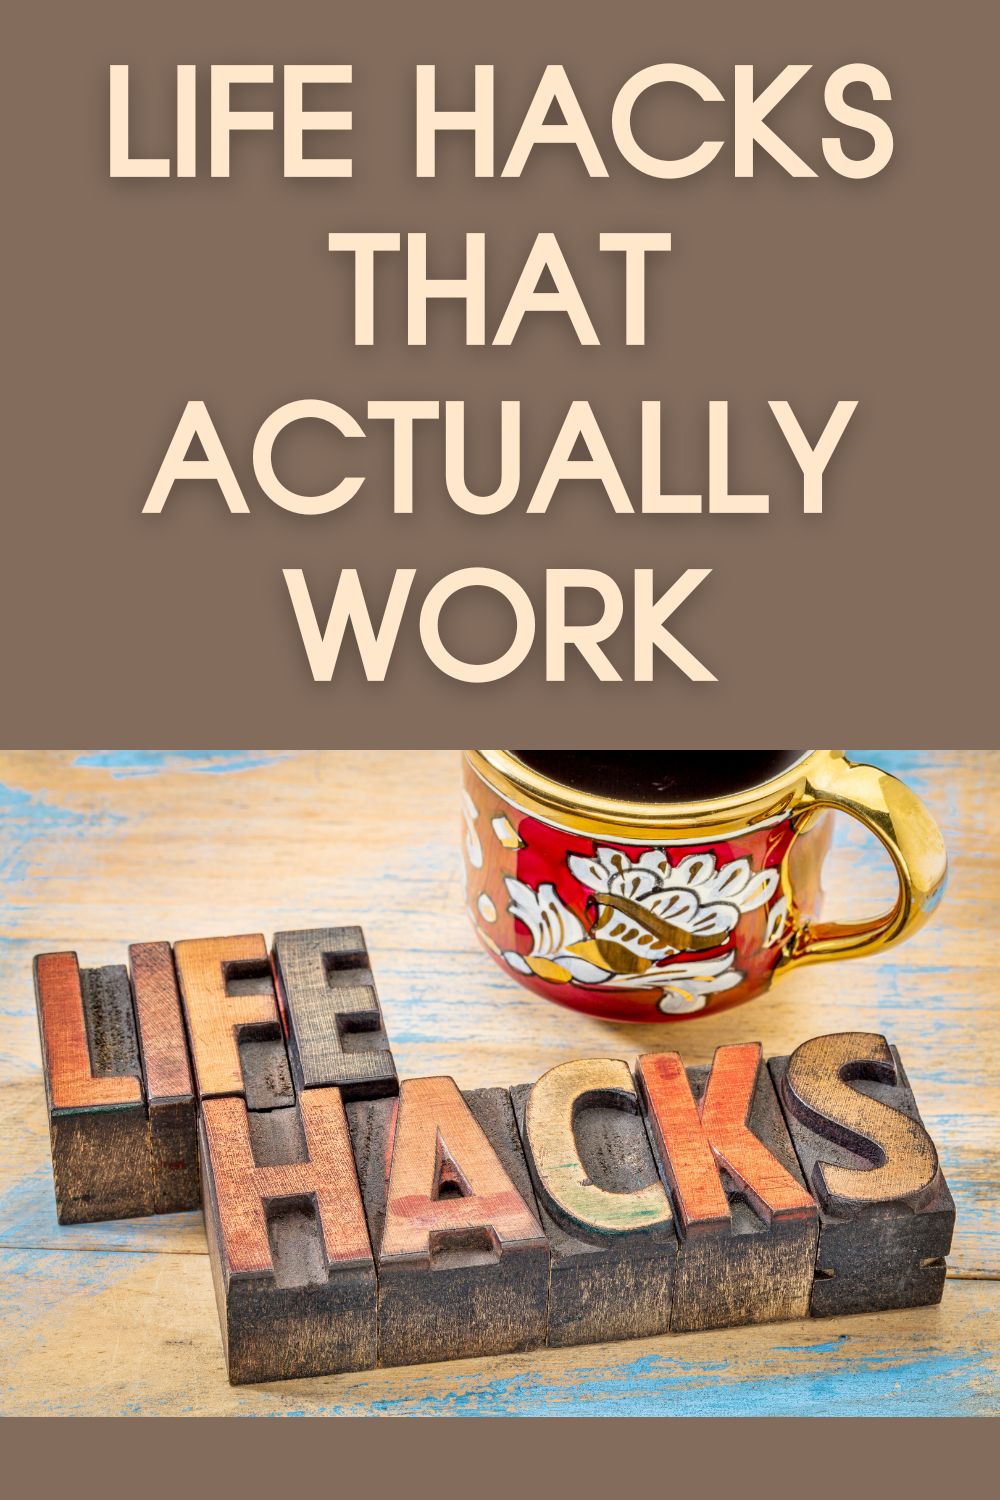 Life hacks that actually work.